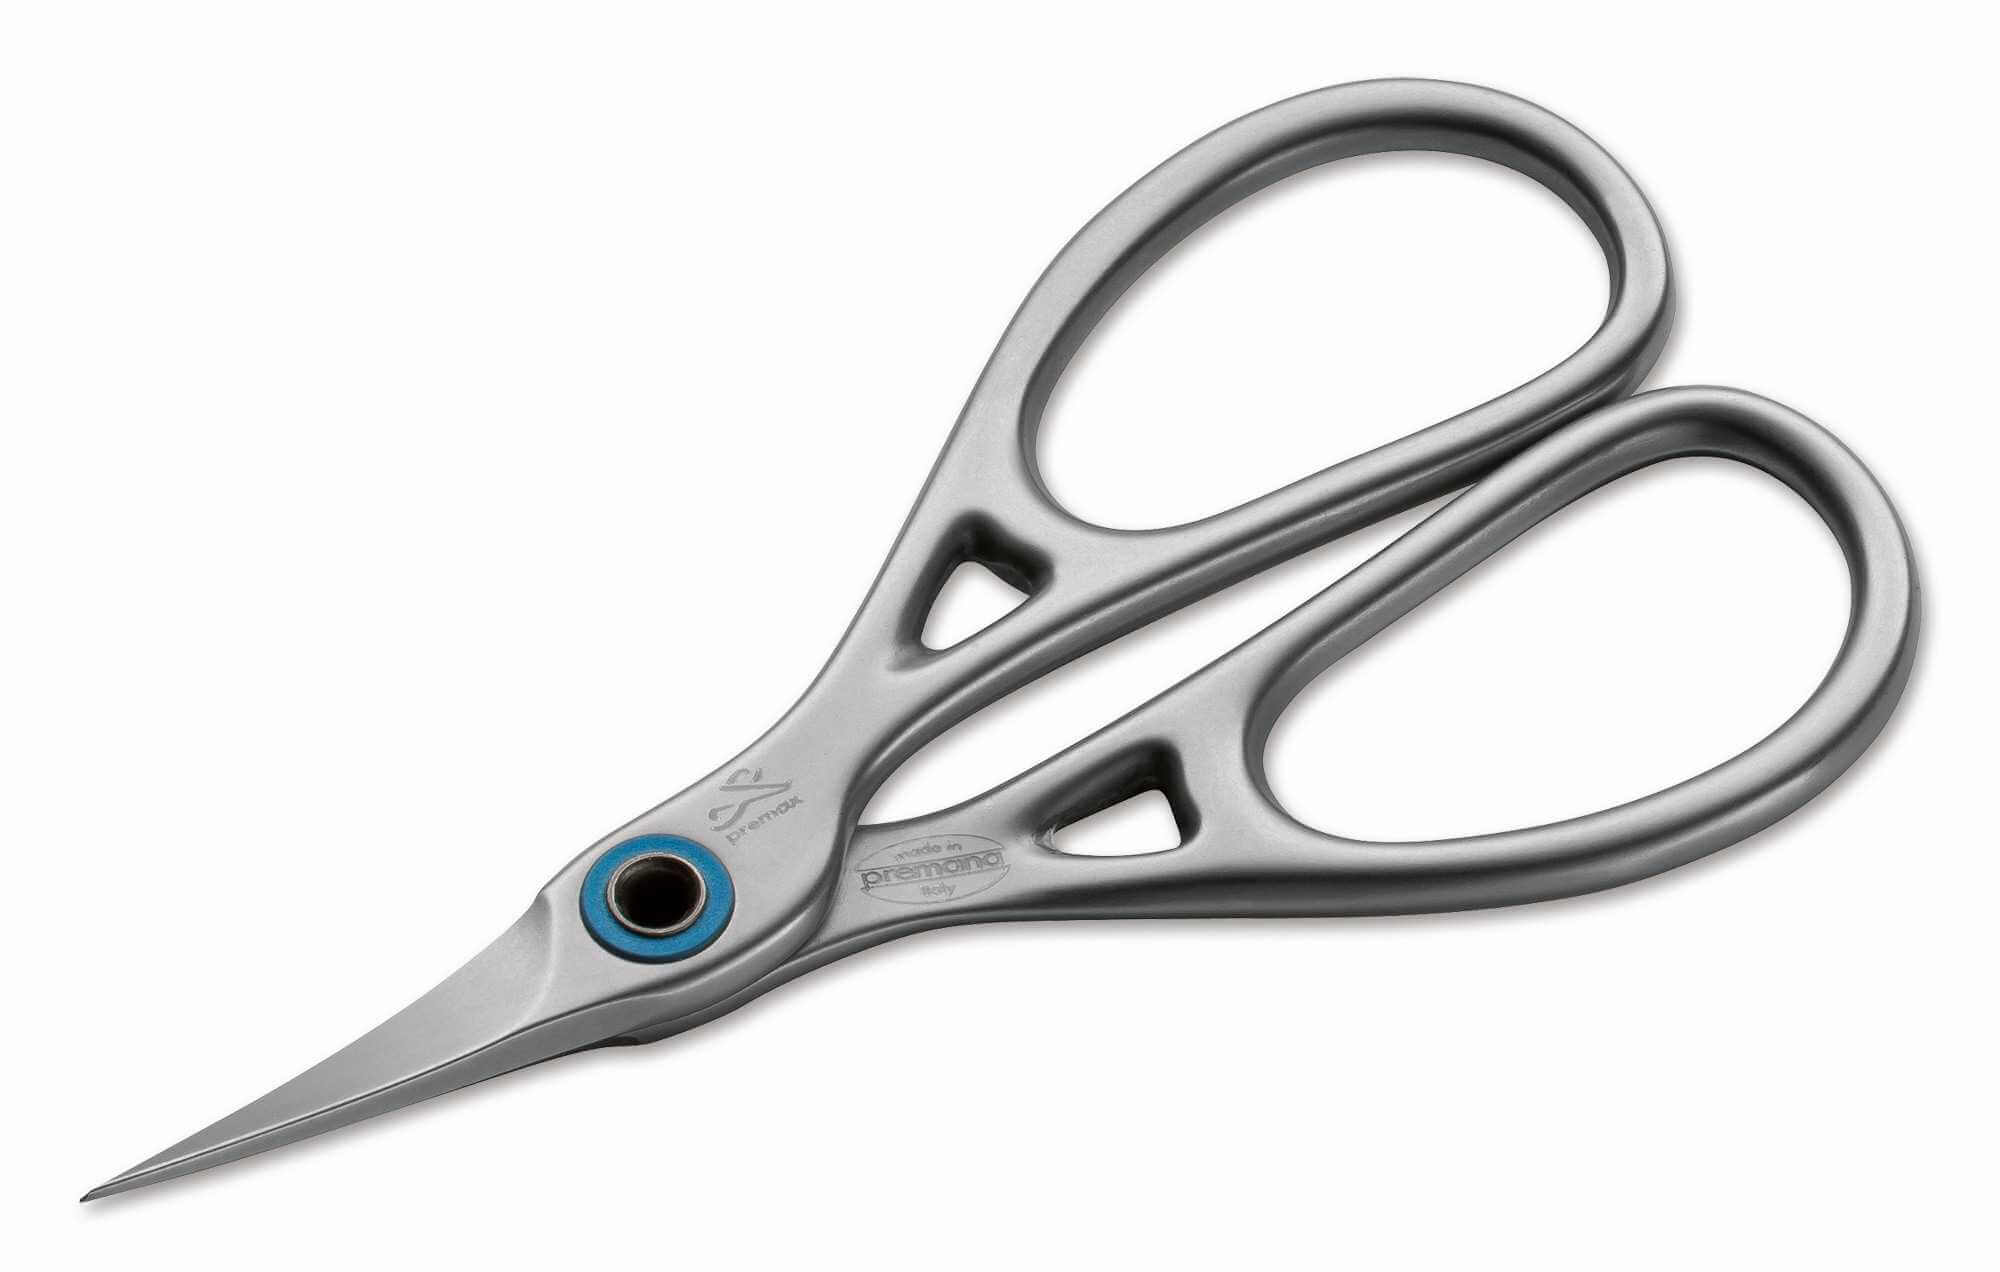 Premax Ringlock Cuticle Scissors Curved